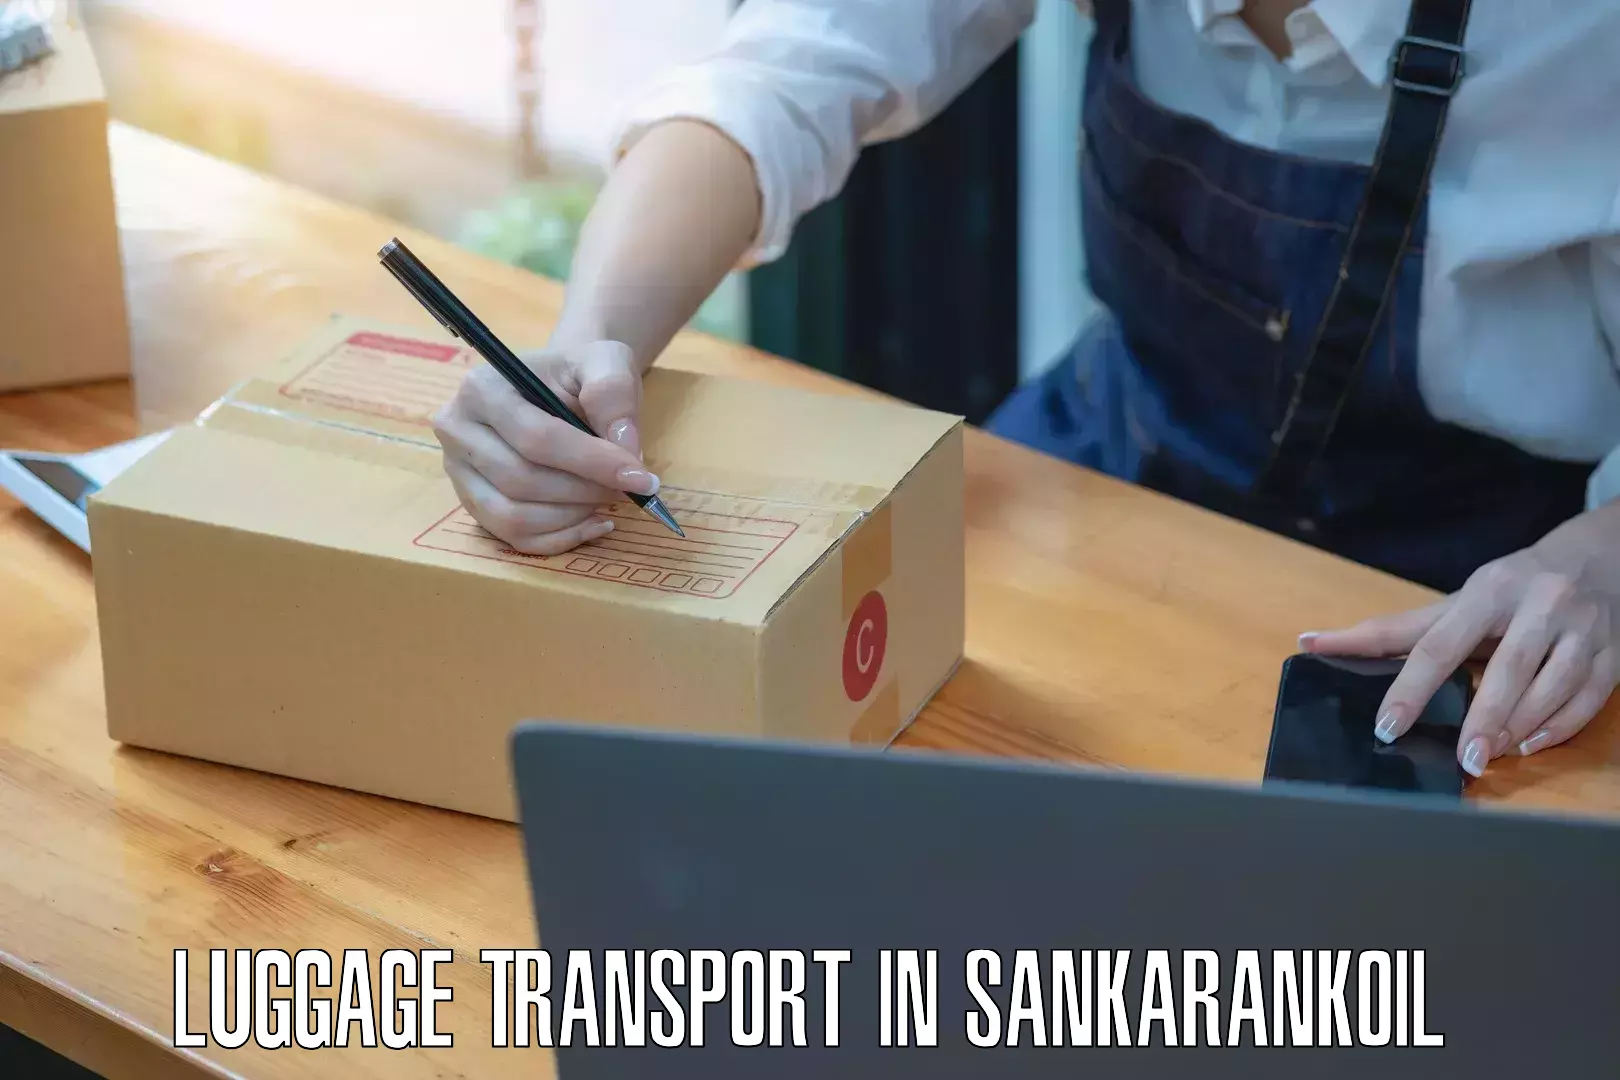 Automated luggage transport in Sankarankoil